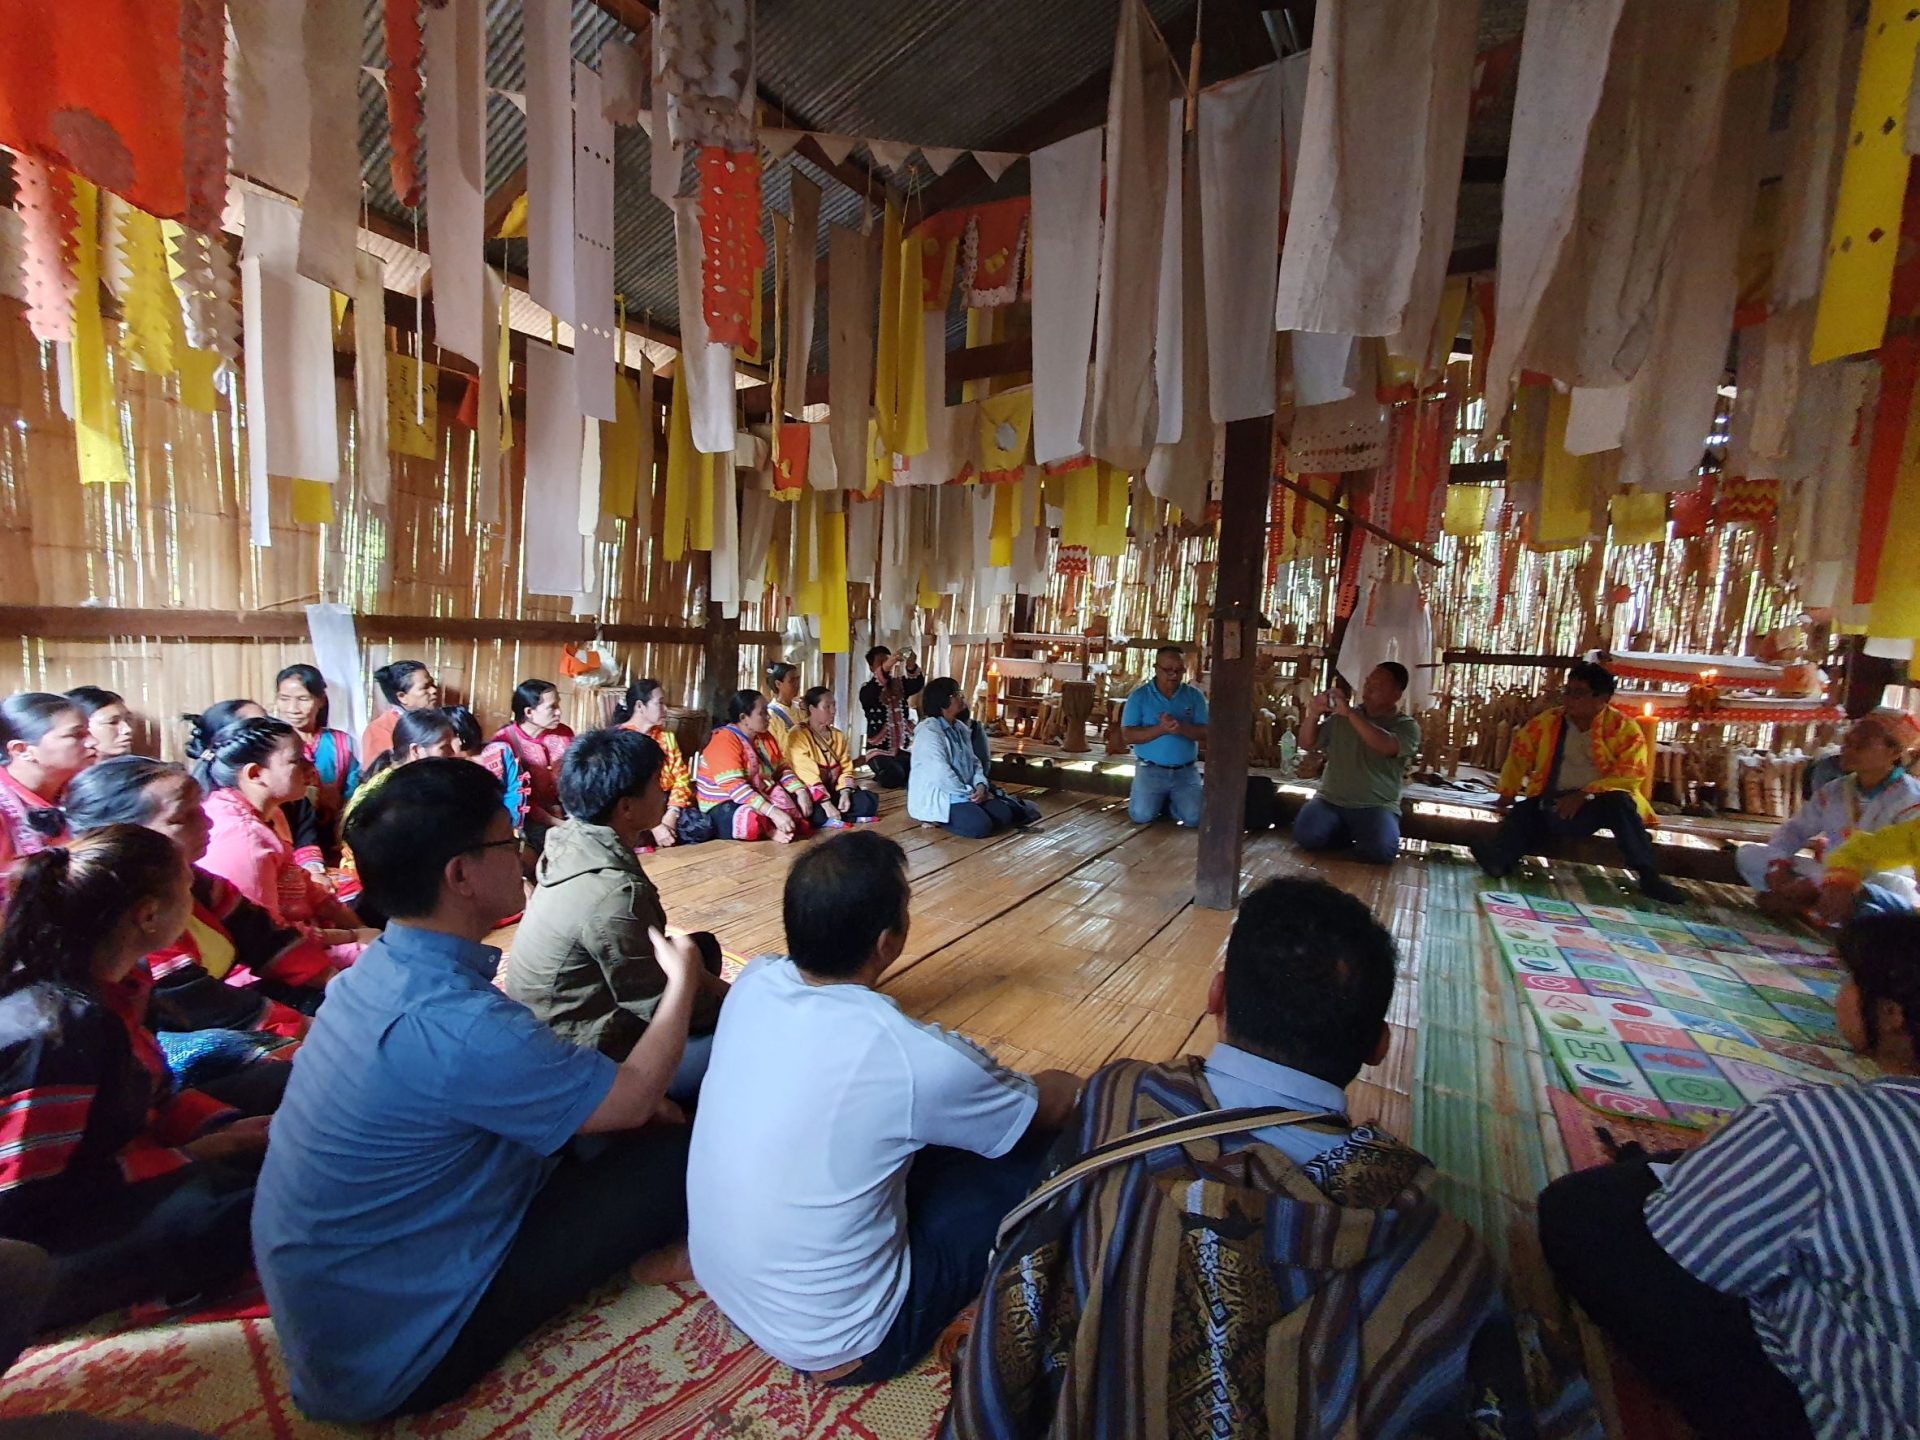 Lahu worship house interior, Thailand